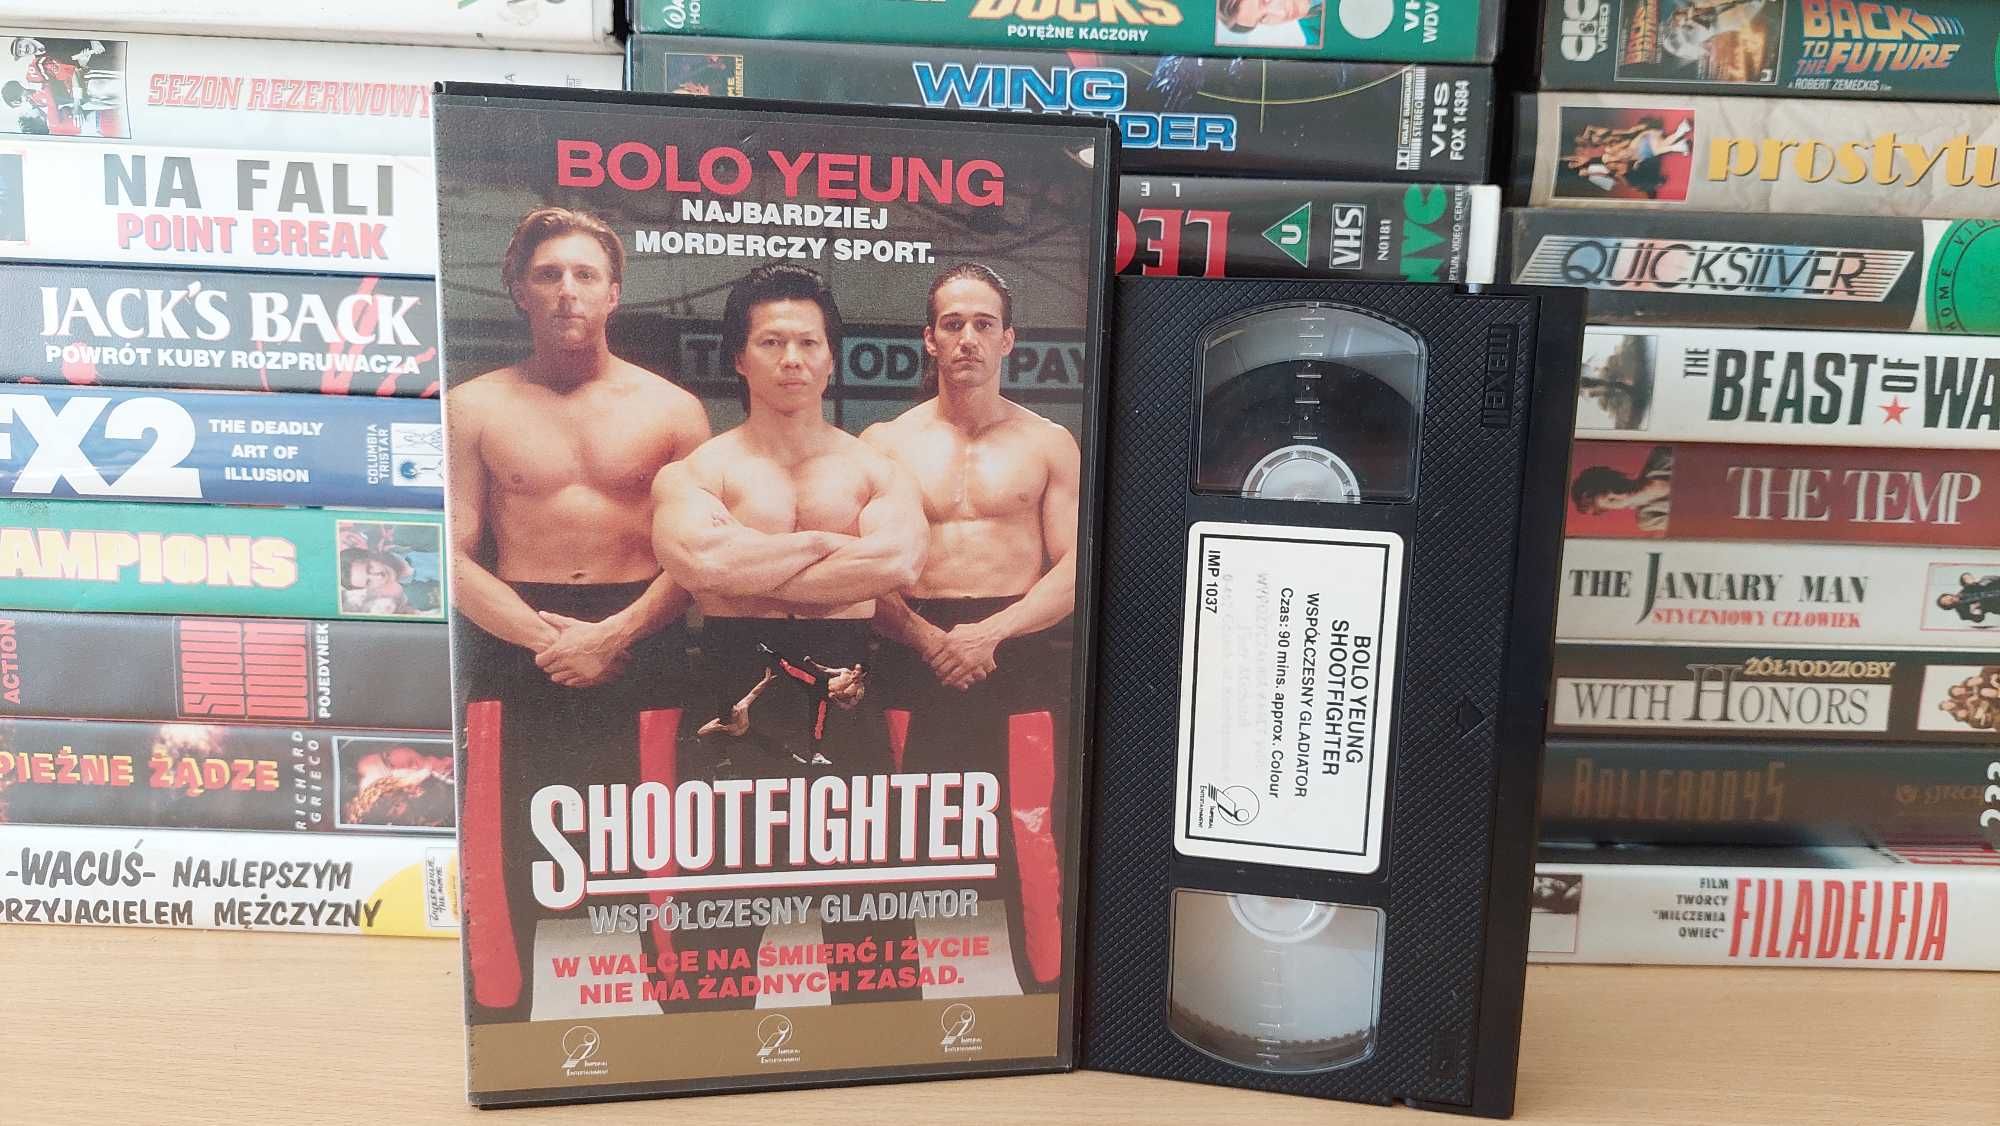 Współczesny Gladiator - (Shootfighter: Fight to the Death) - VHS